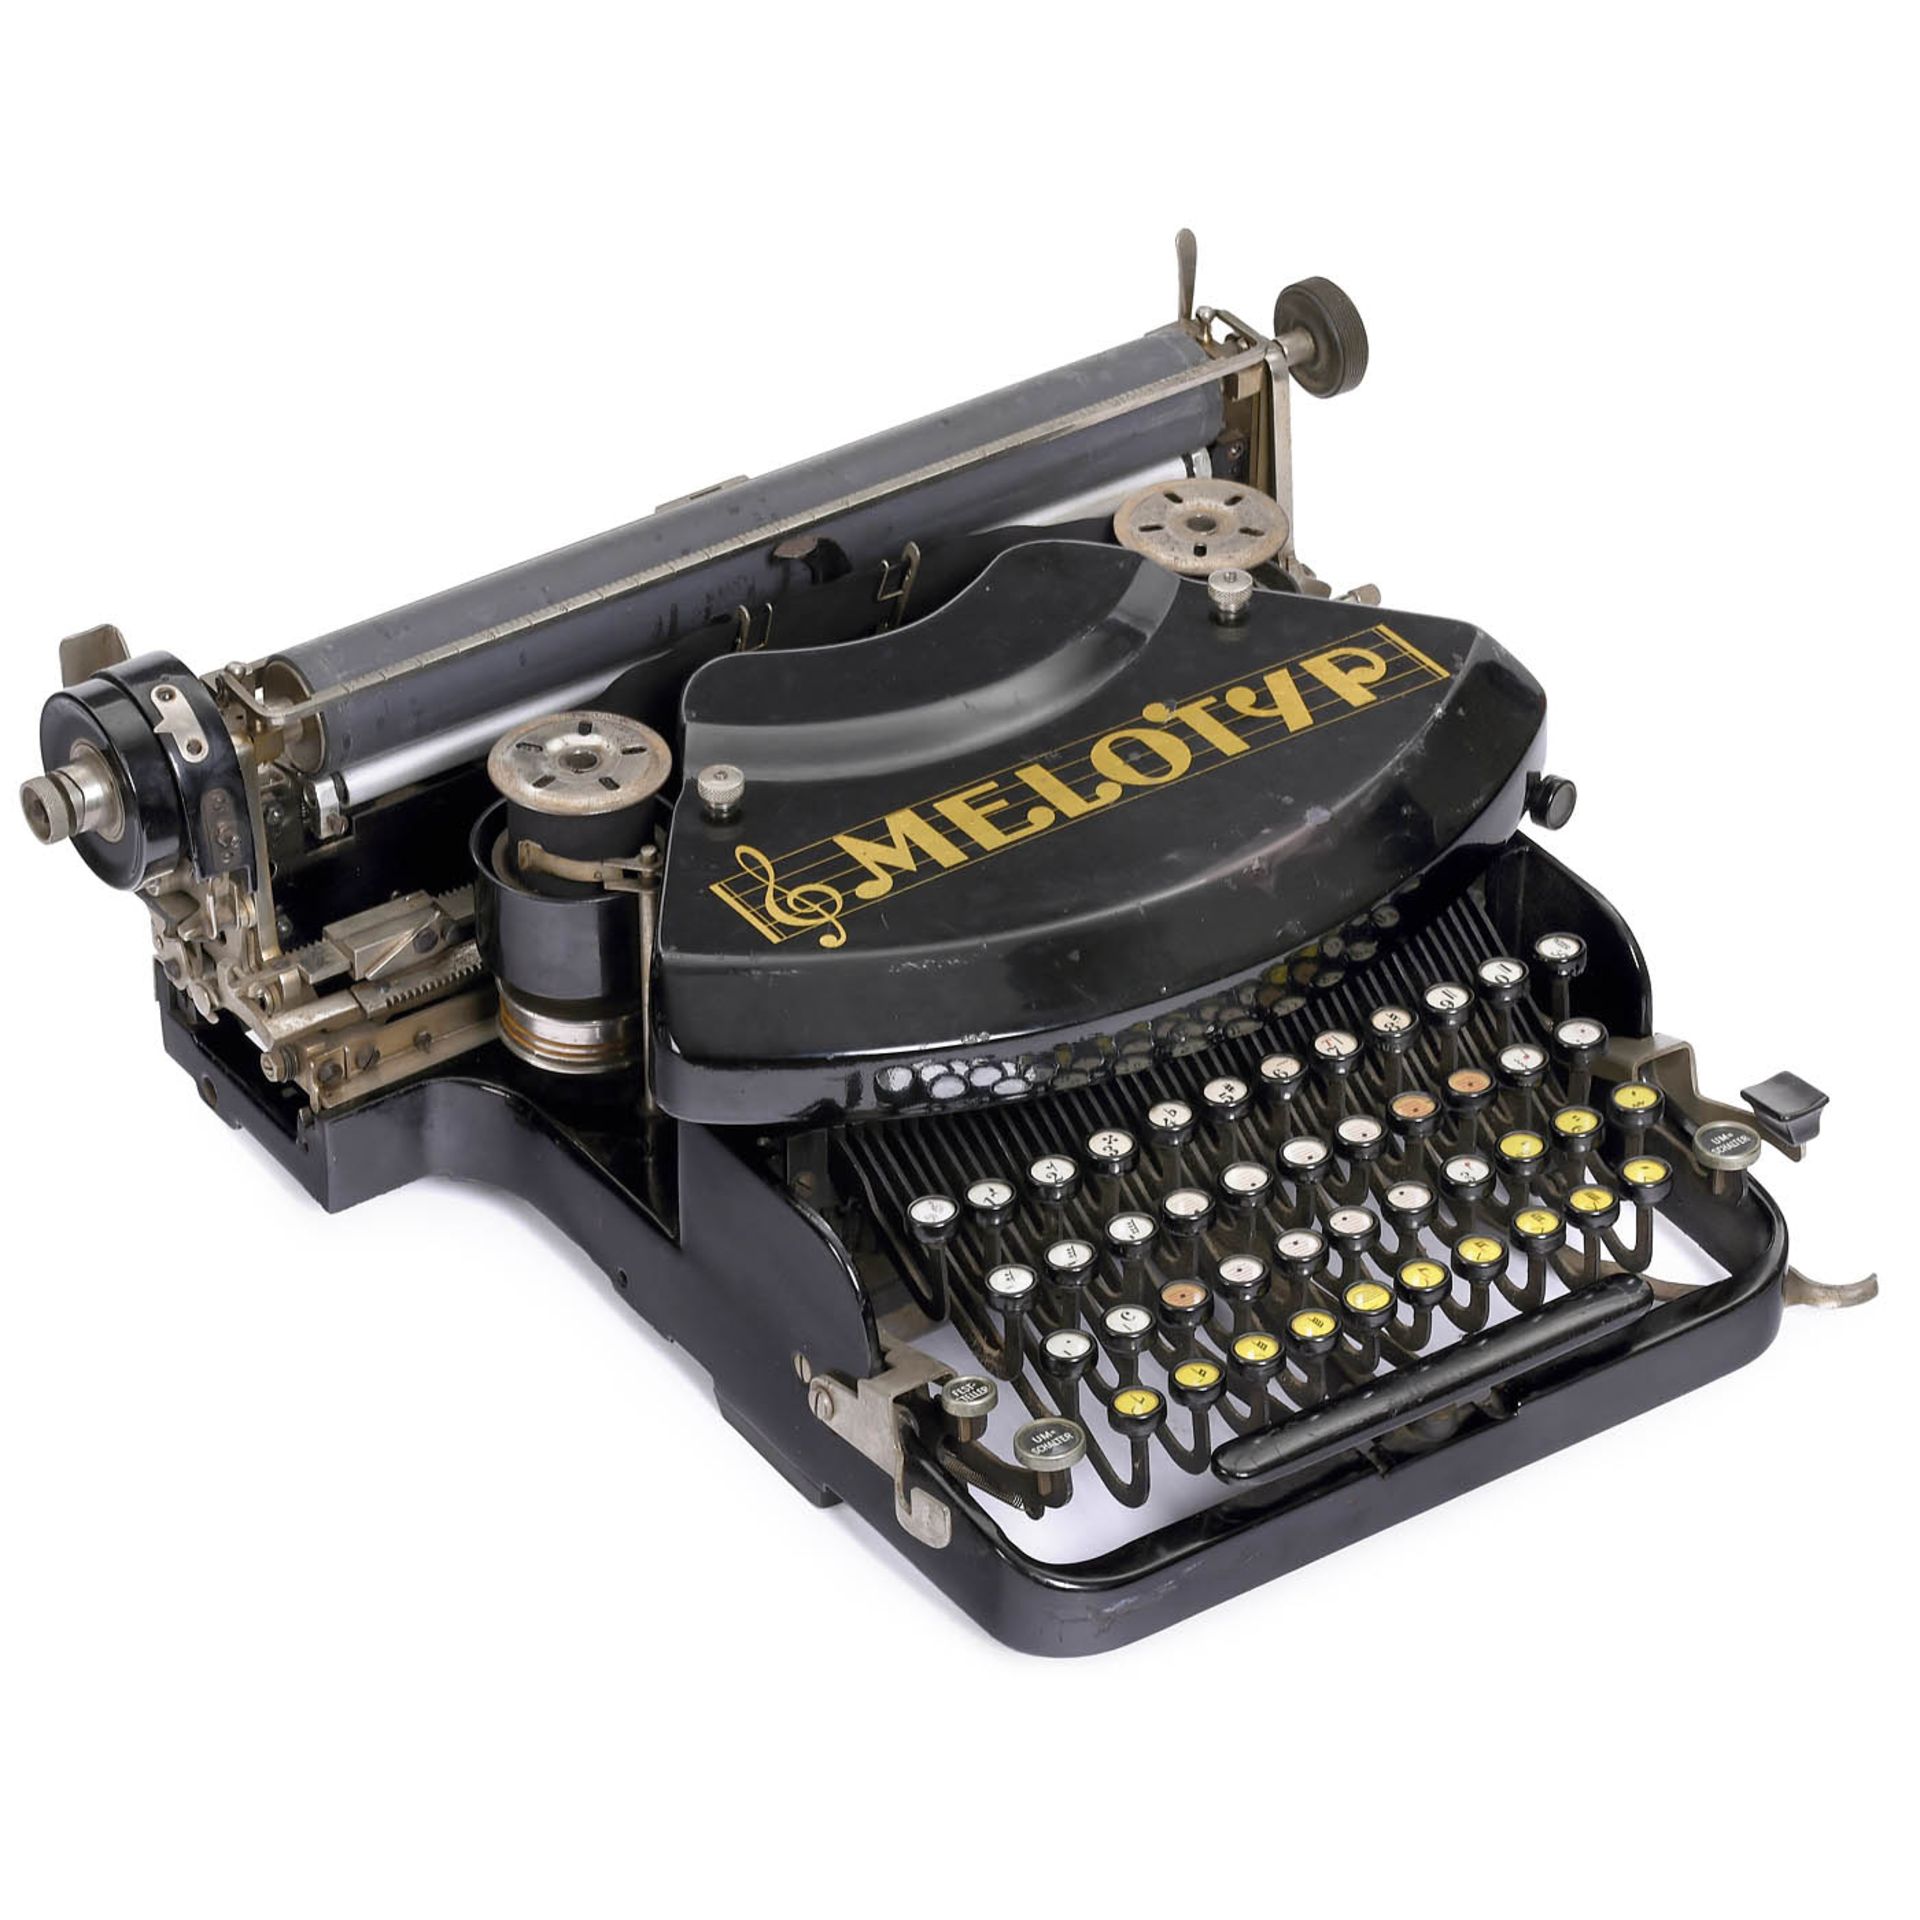 Melotyp Typewriter, c. 1937